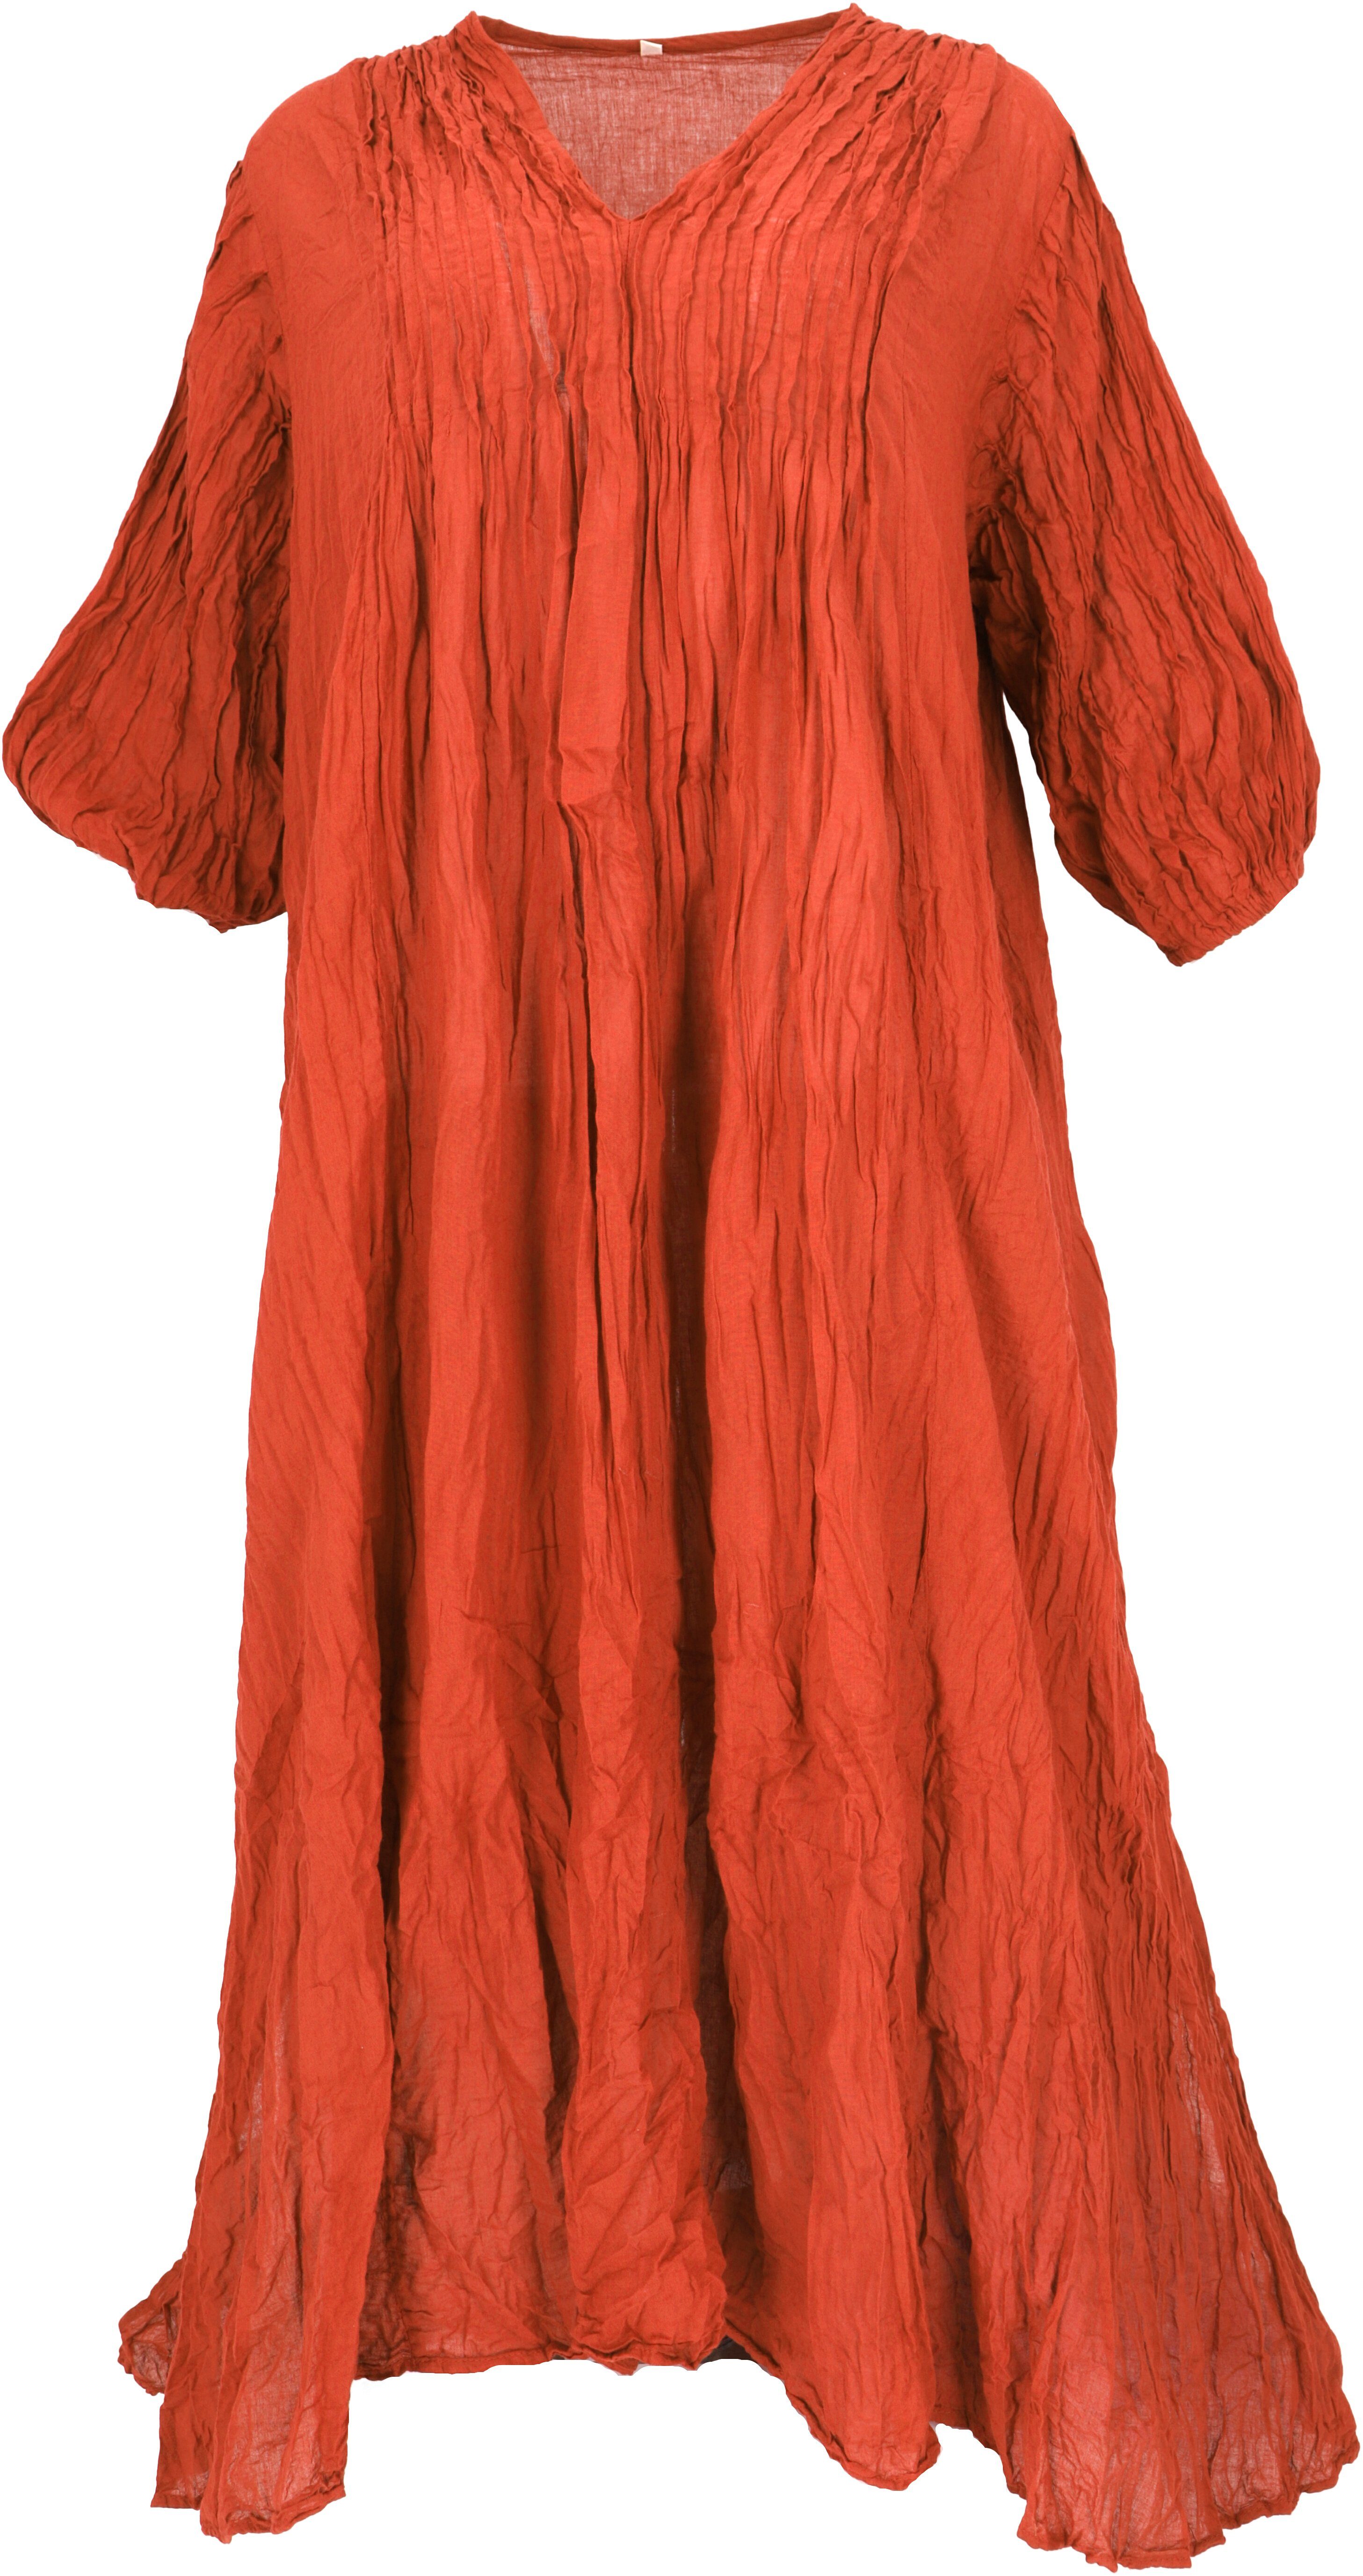 Guru-Shop Midikleid Boho Maxikleid, luftiges langes Sommerkleid für.. alternative Bekleidung orange